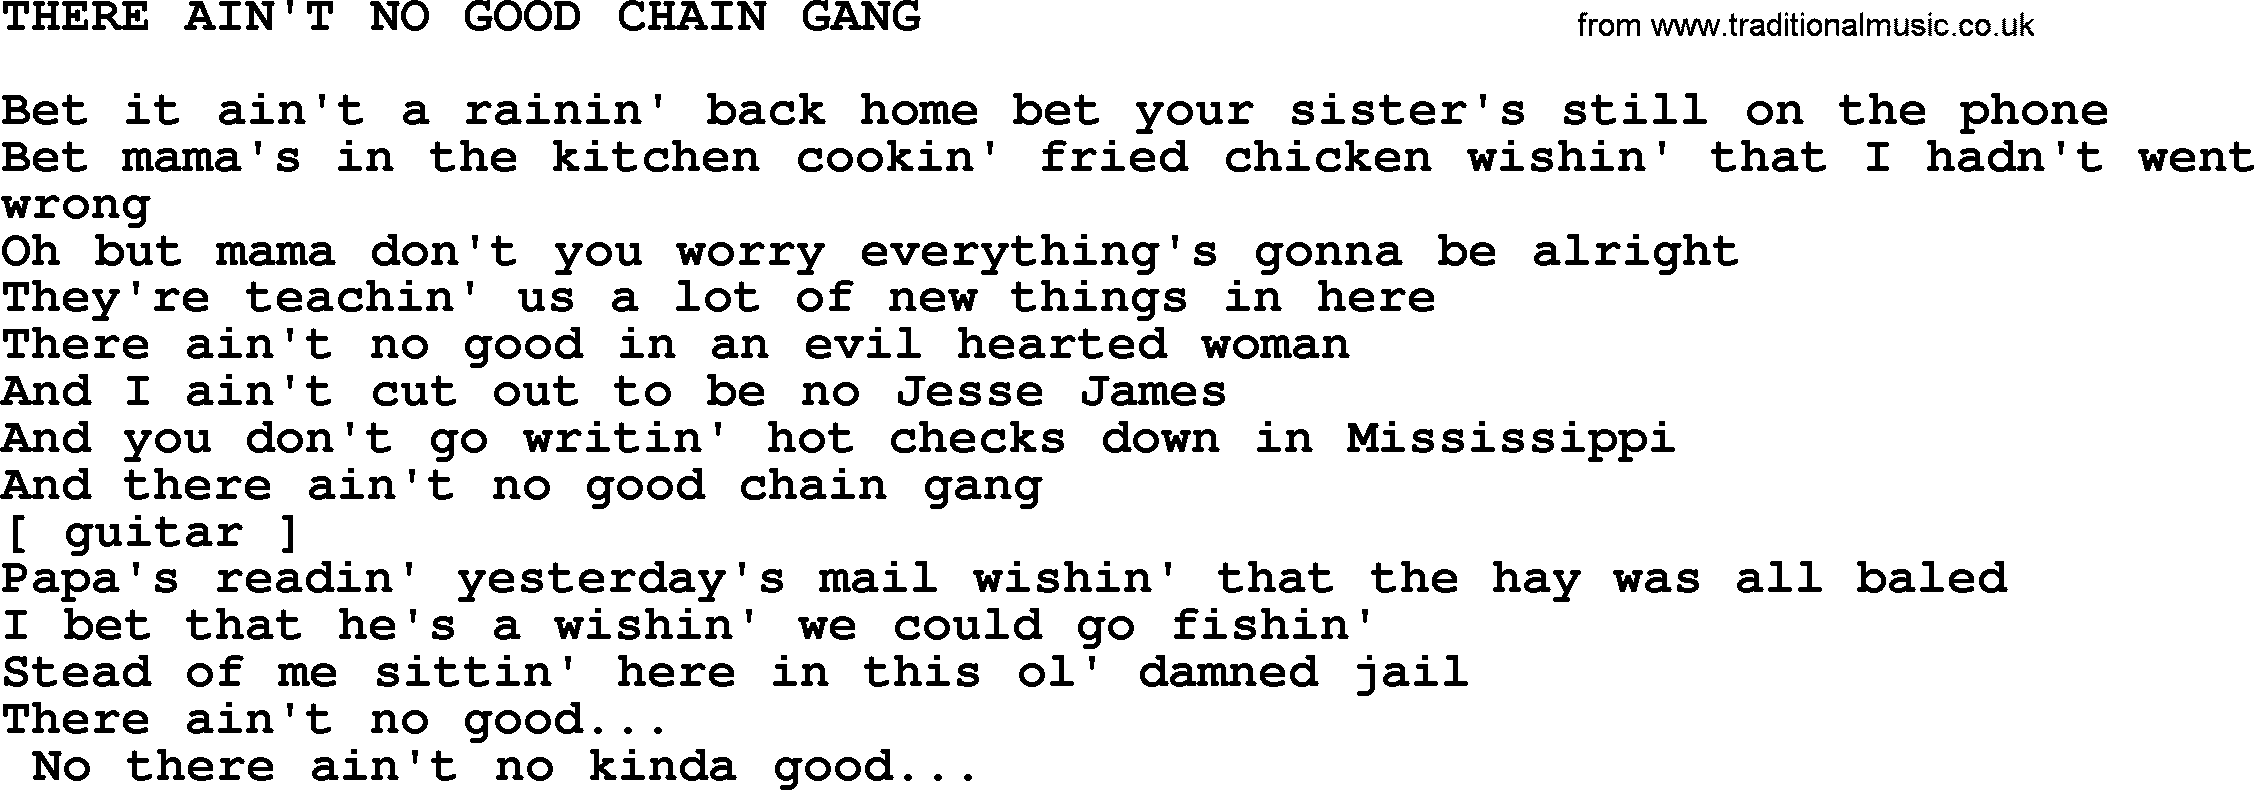 Merle Haggard song: There Ain't No Good Chain Gang, lyrics.